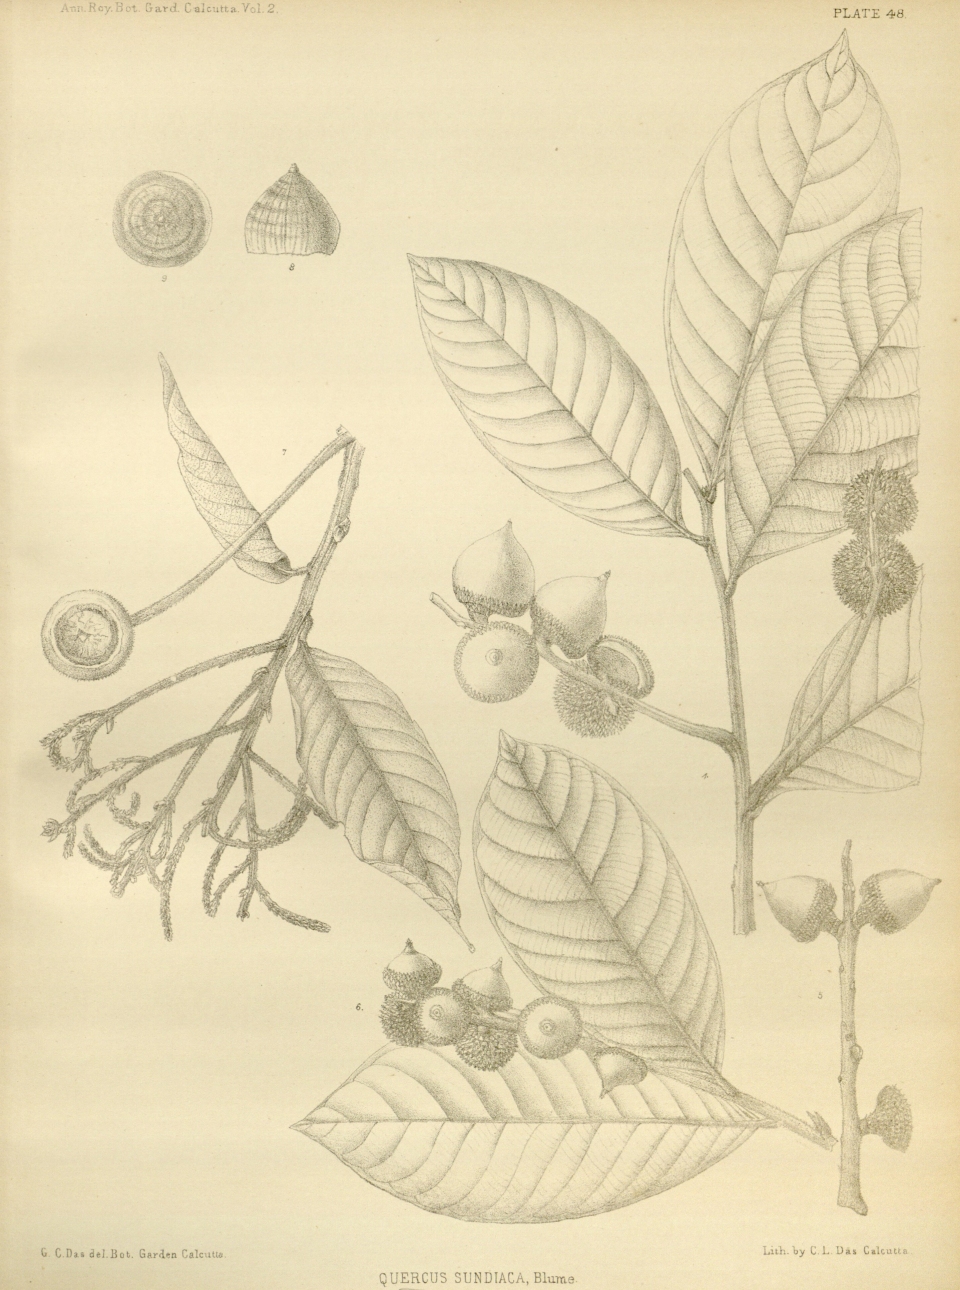 Lithocarpus sundaicus